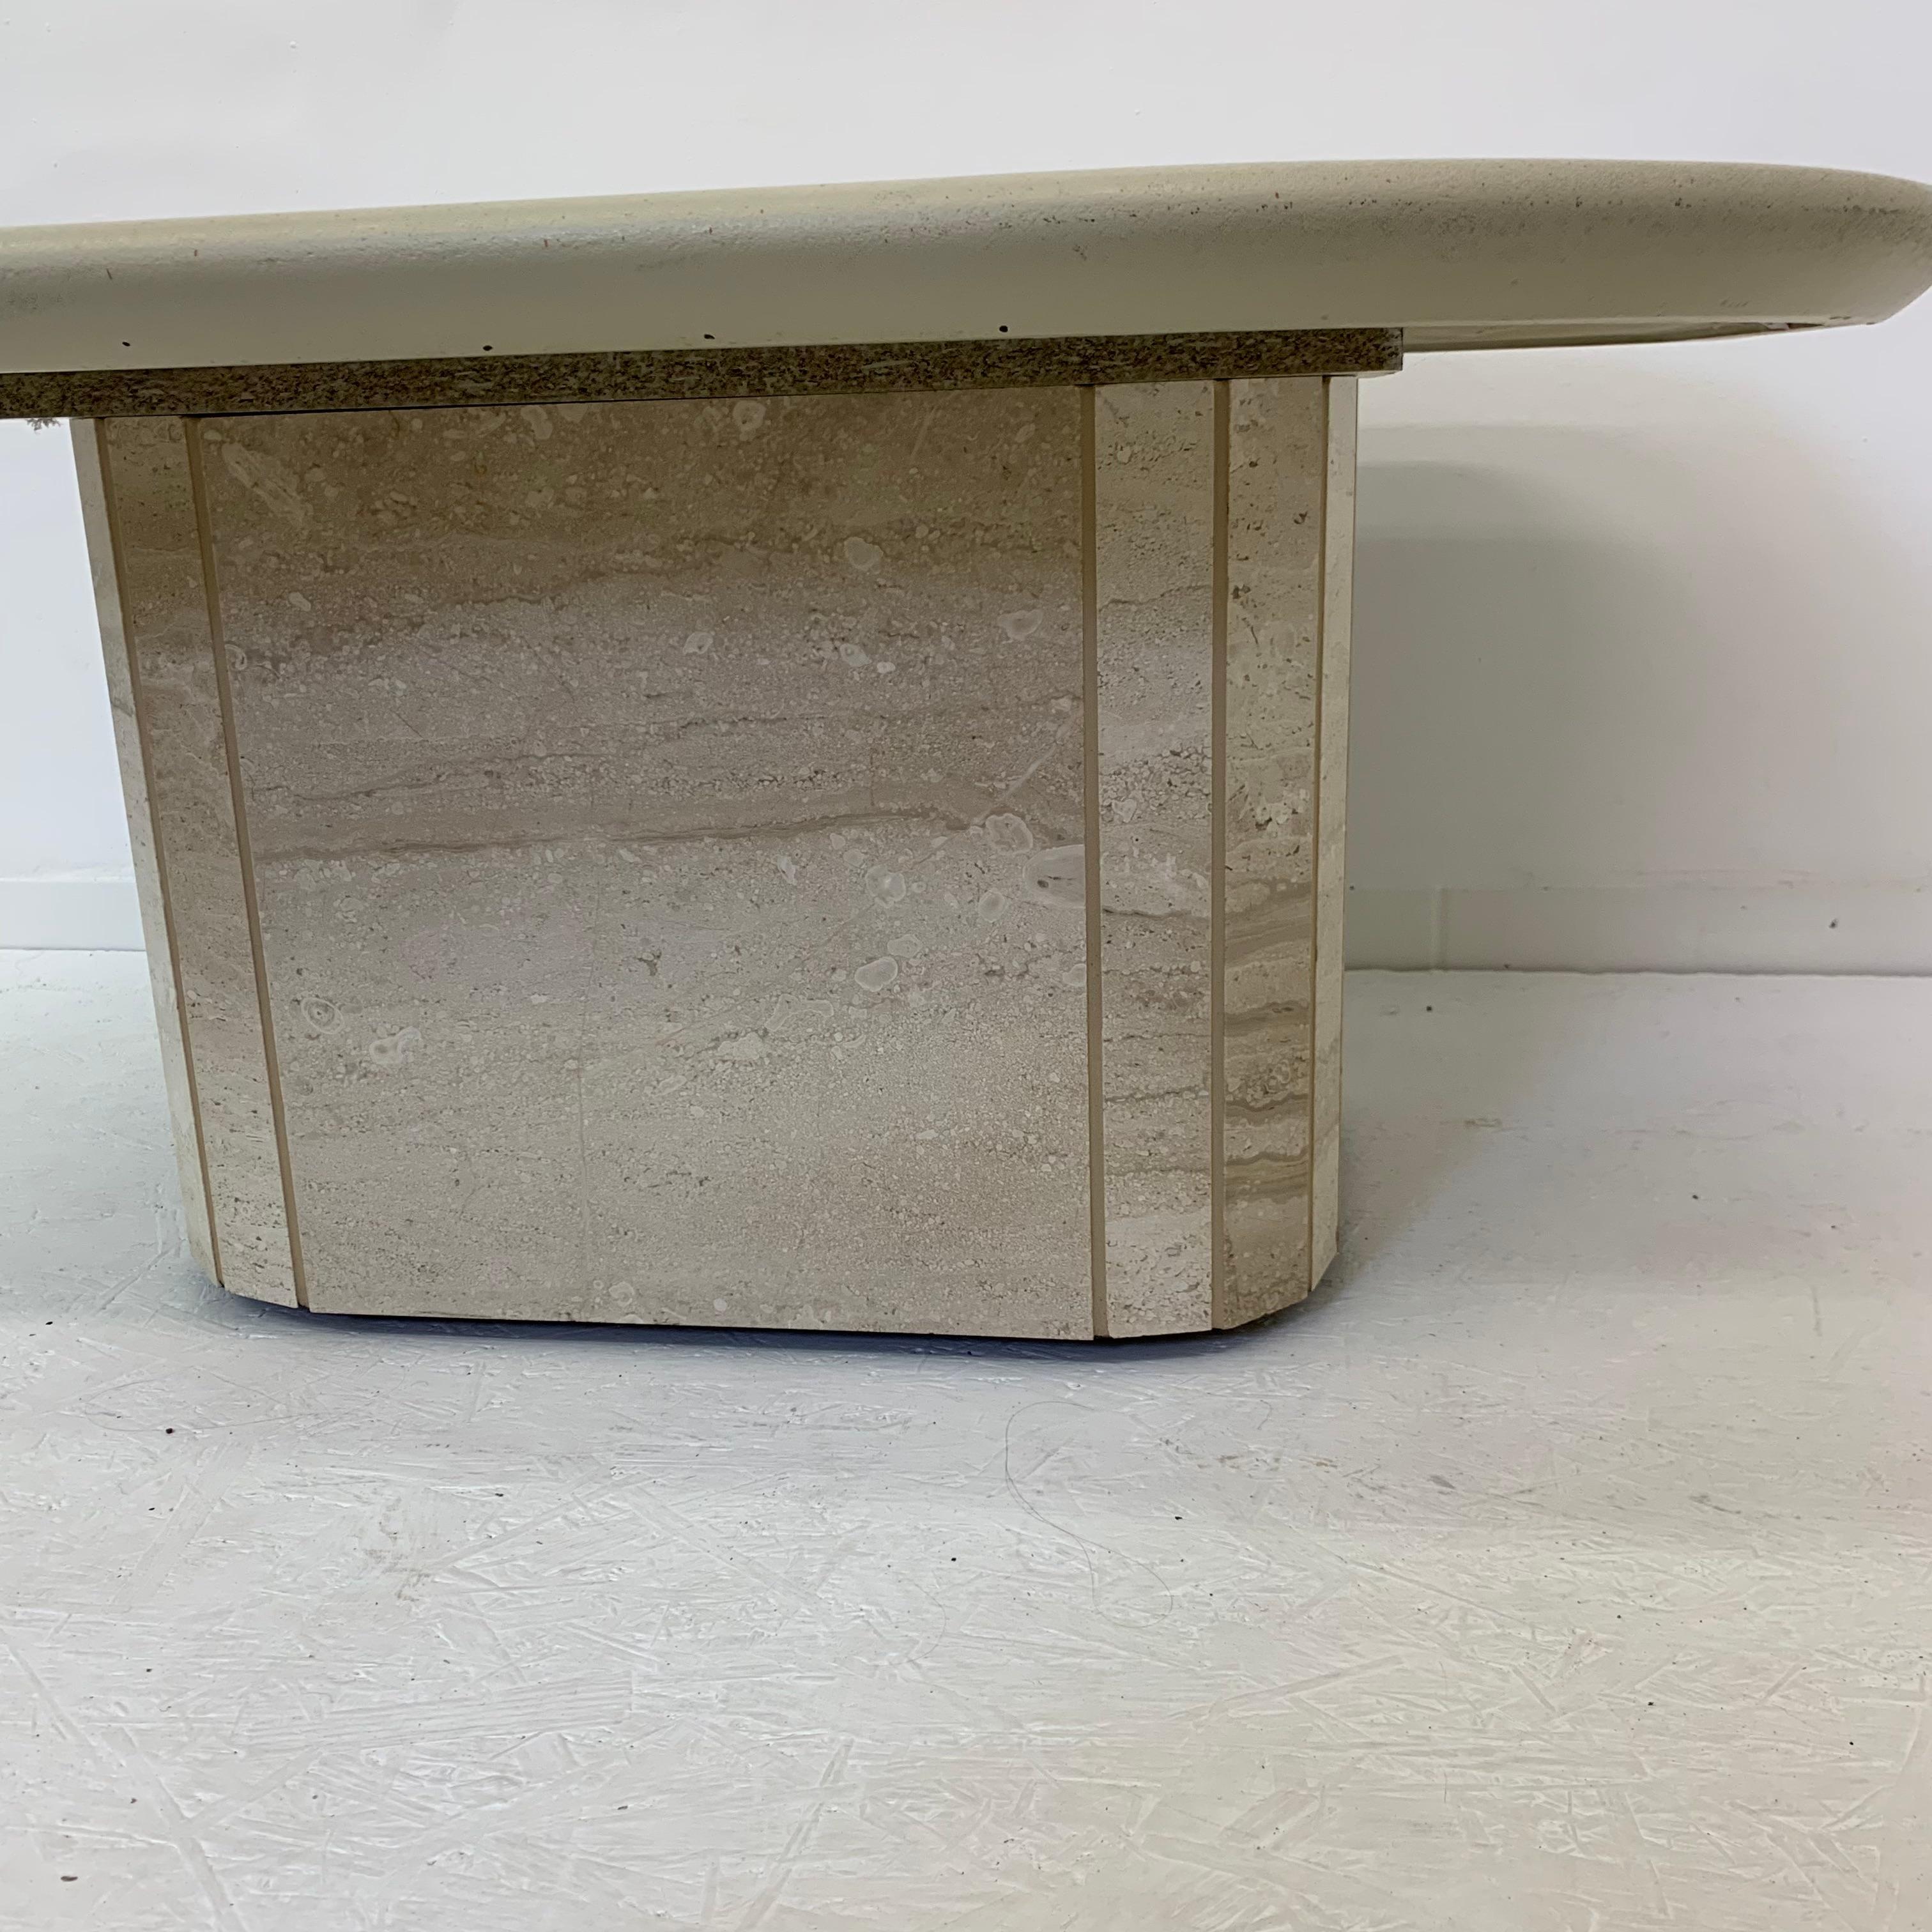 Material: Travertine, concrete , brass, wood, plastic

Dimensions: 80cm D, 103cm W, 47cm H

Condition: good

Period: 1970’s.